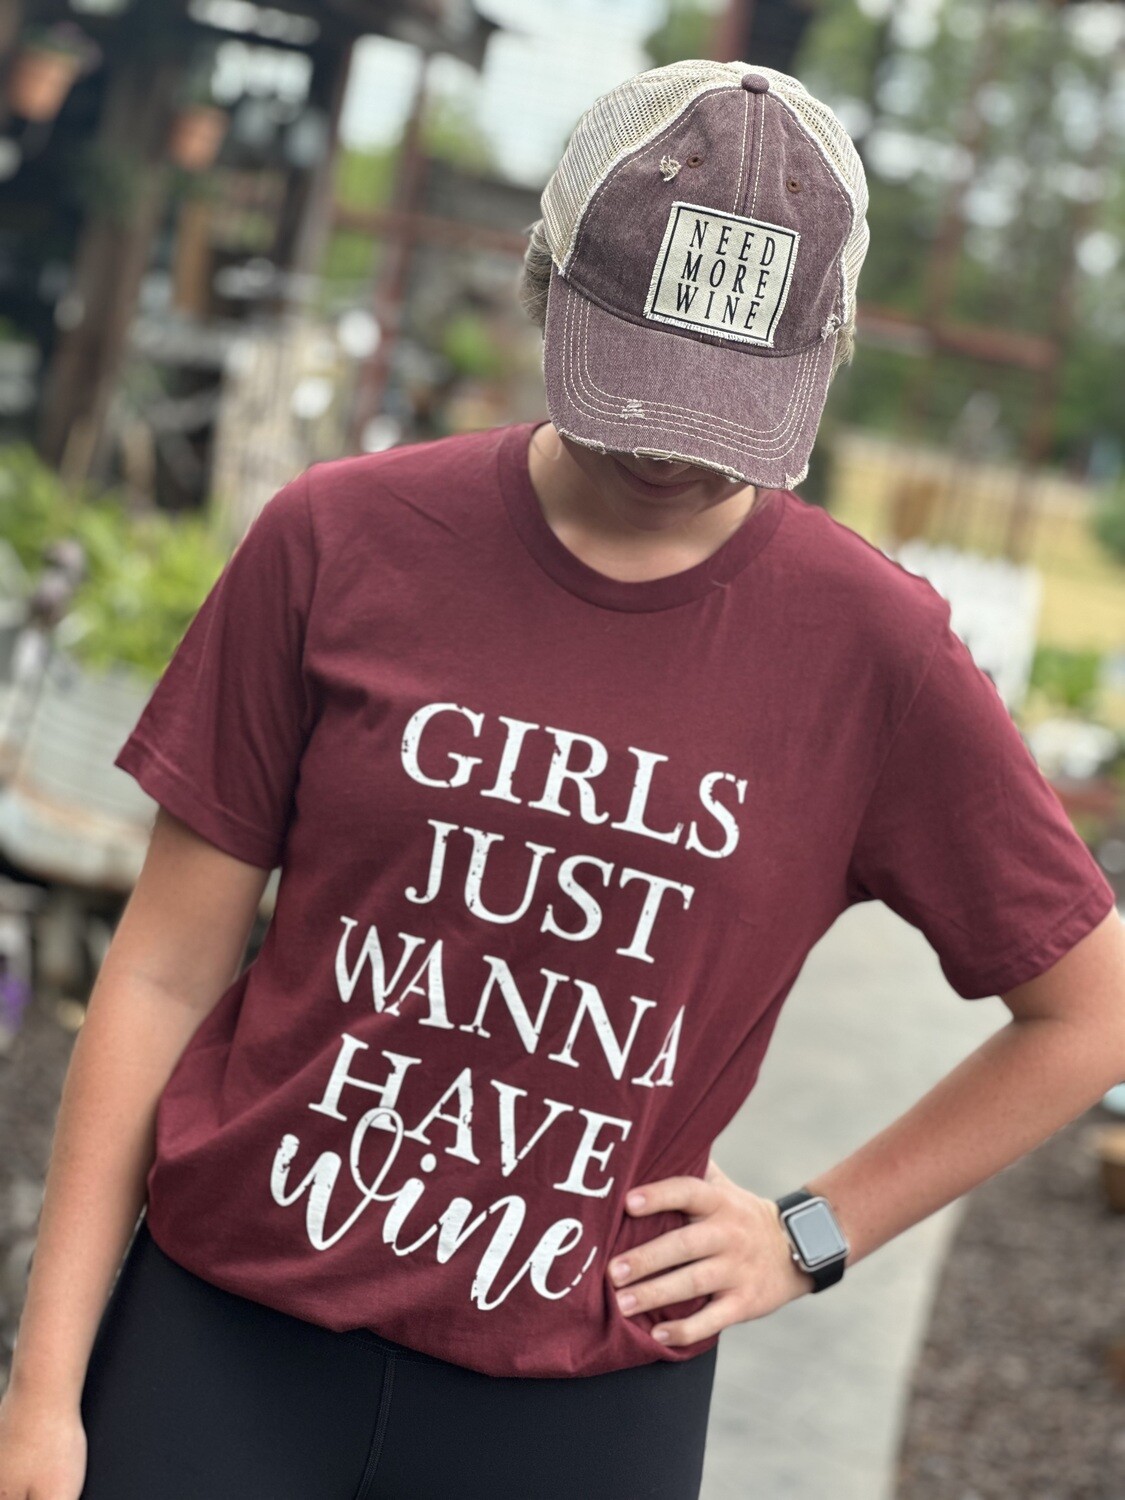 Girls Just Wanna Have Wine